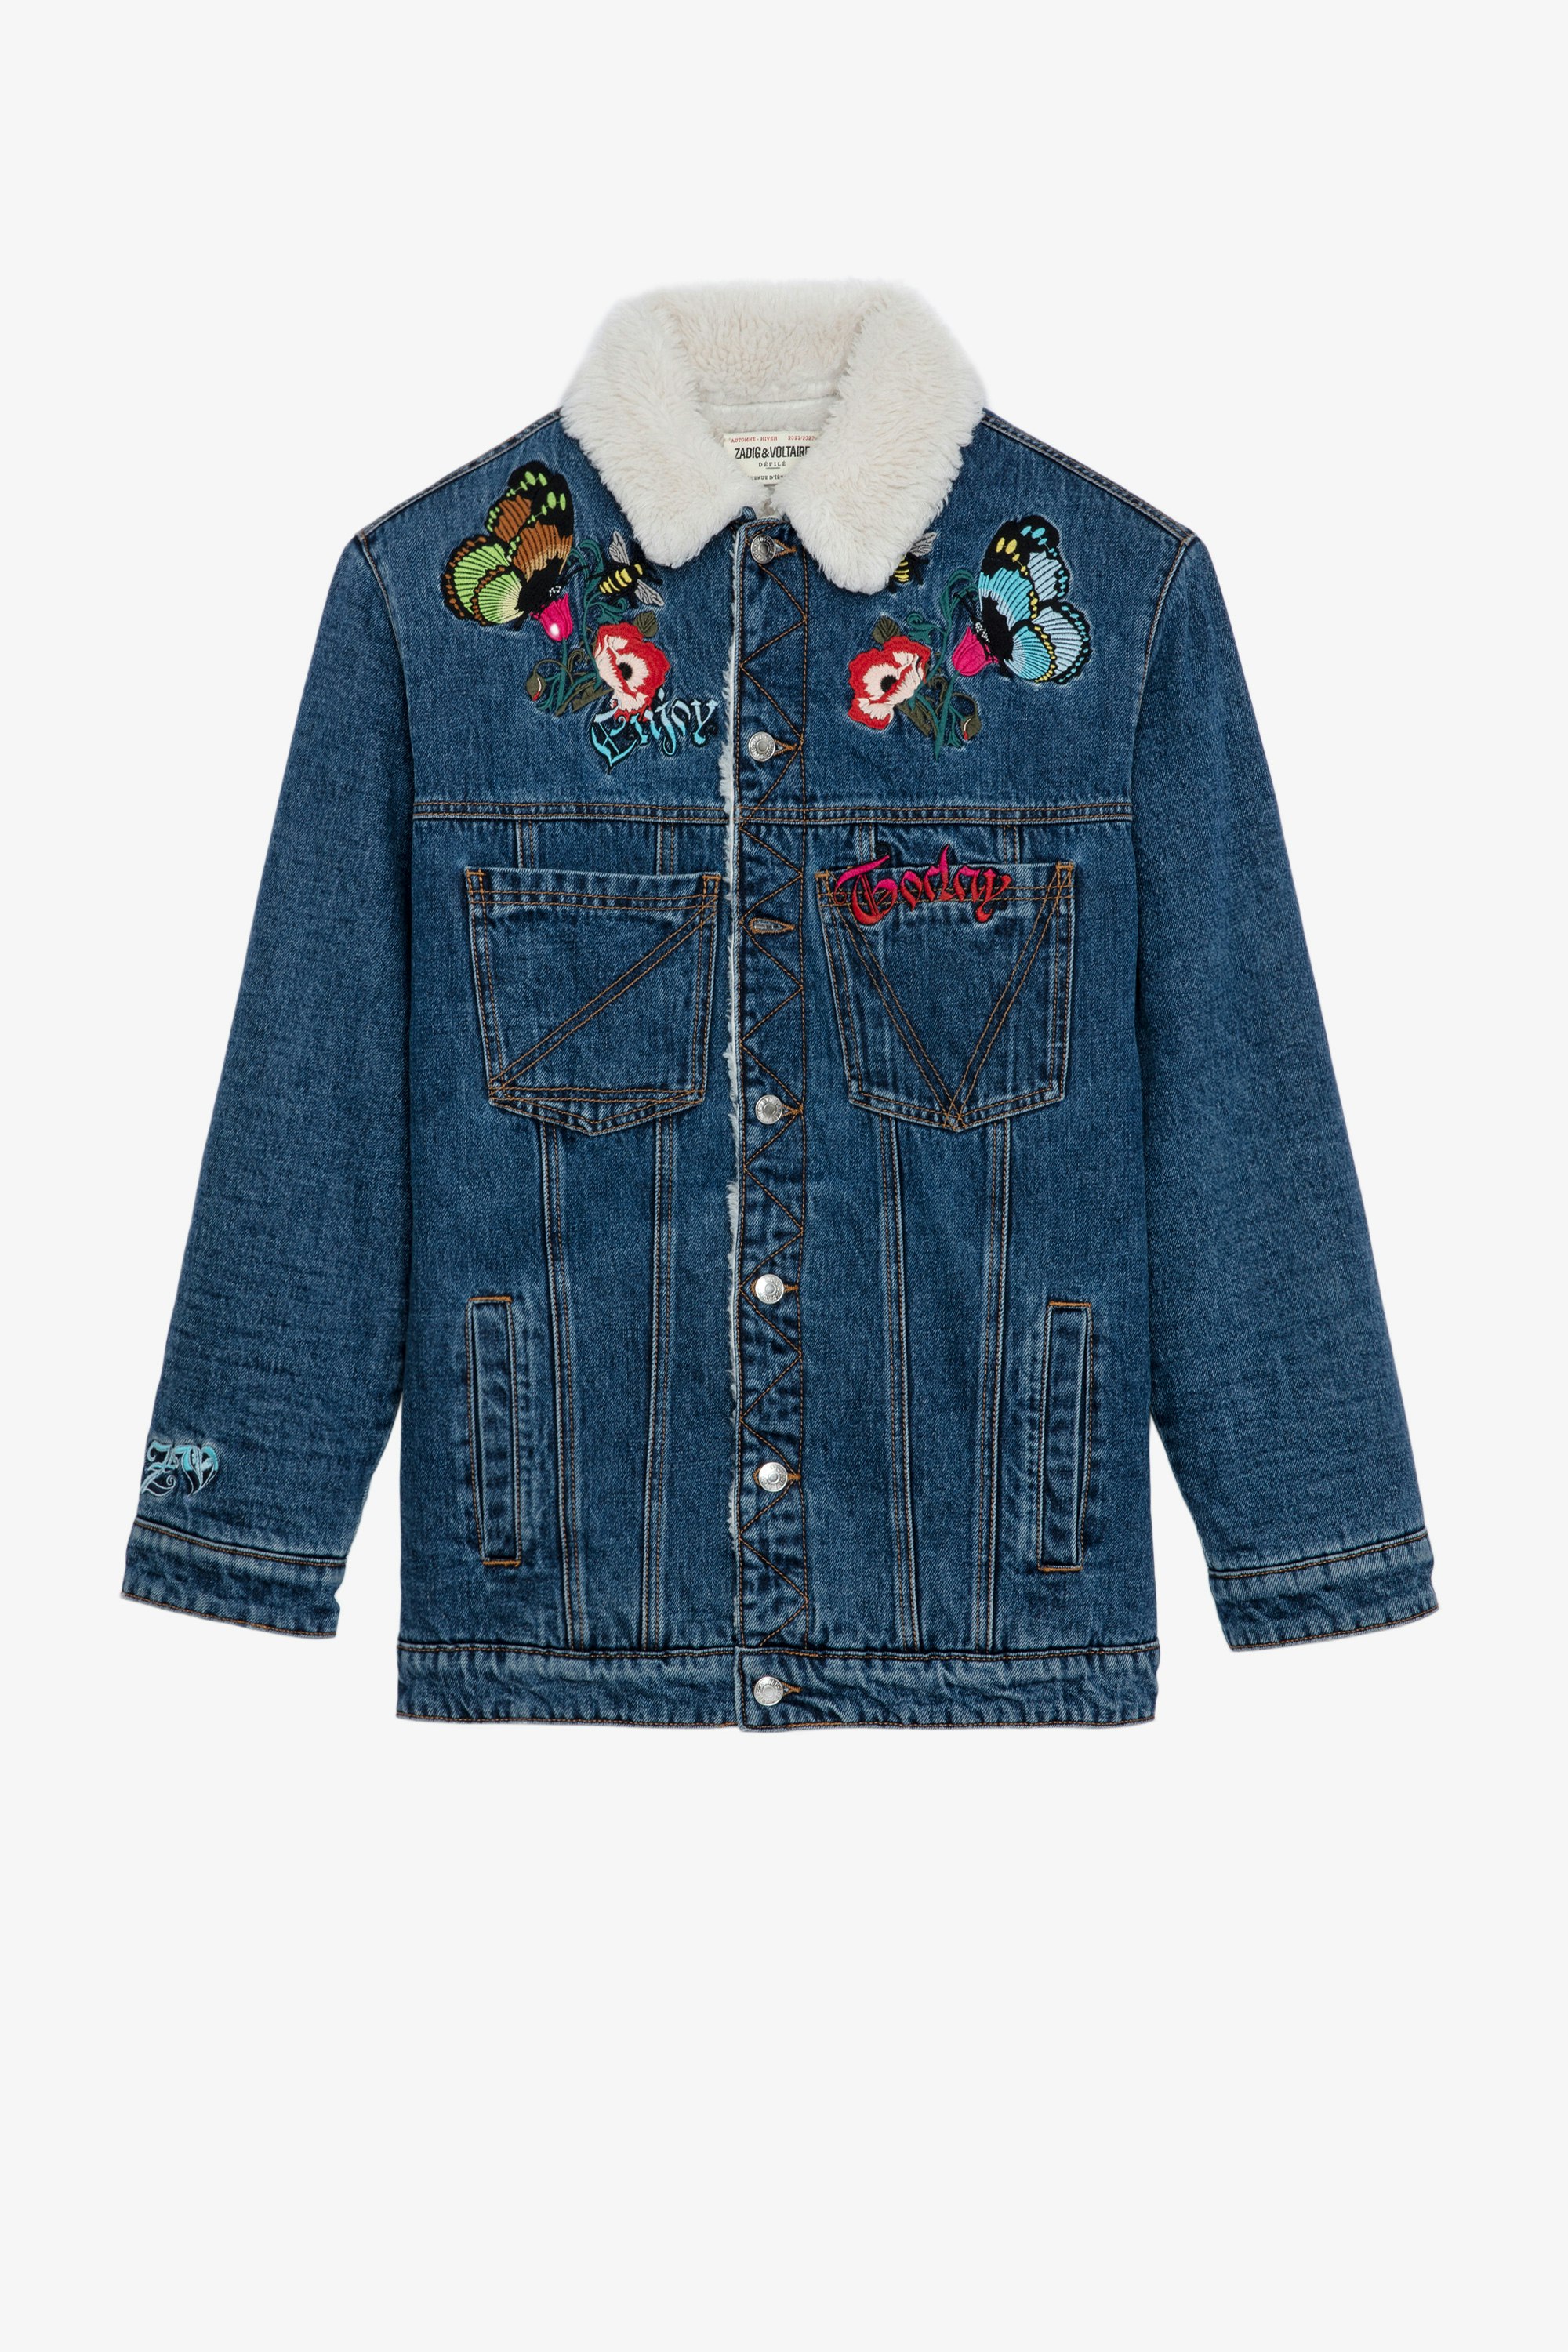 Kiome デニム ジャケット Women’s sky blue denim jacket with embroidery 